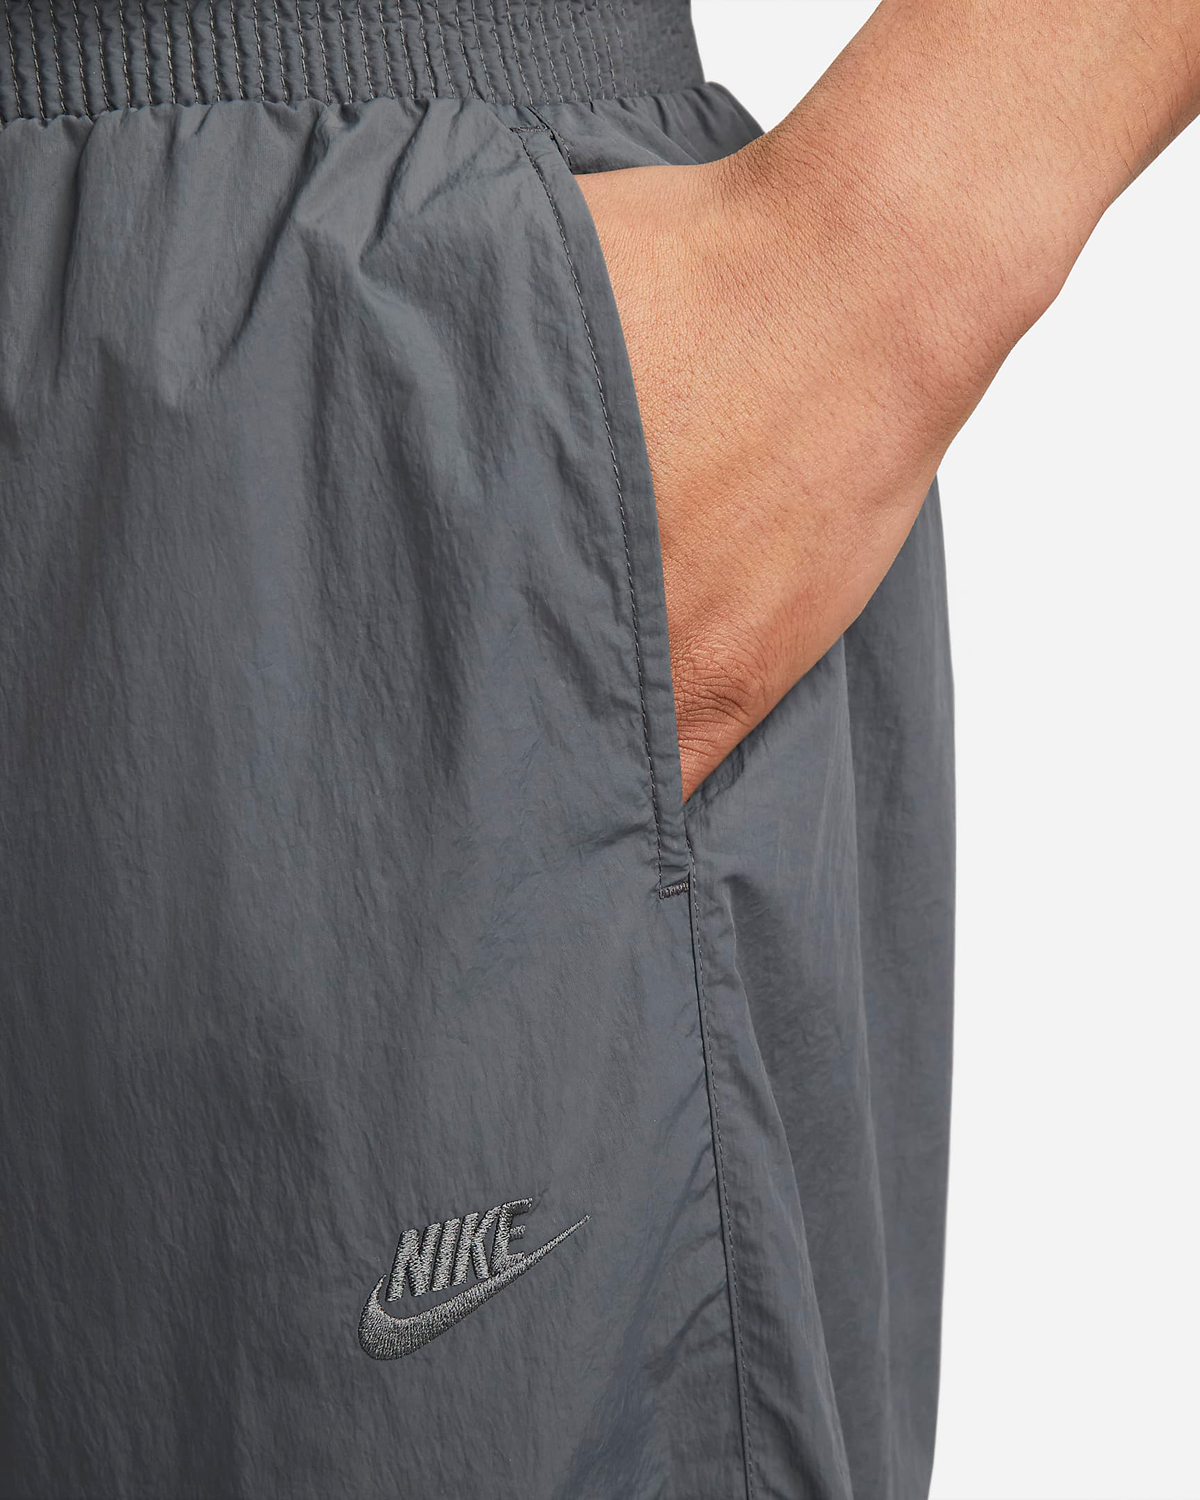 Nike-Sportswear-Tech-Pack-Woven-Pants-Iron-Grey-2